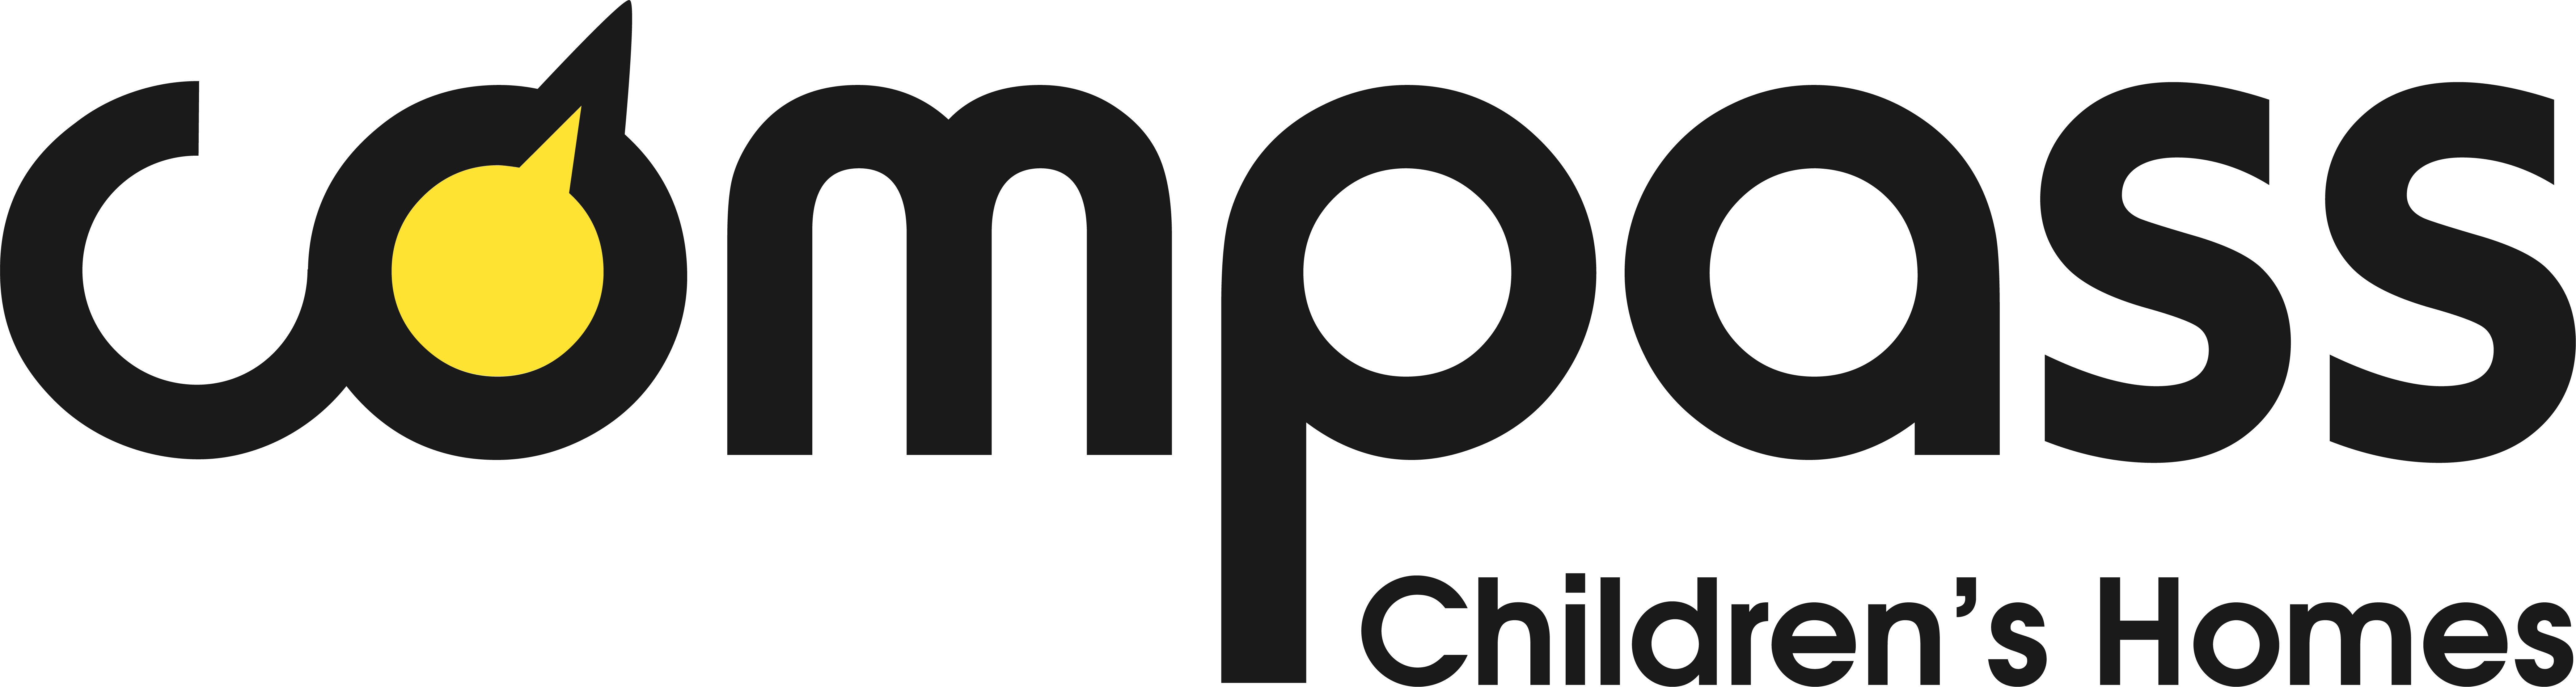 Compass Children's Homes Logo